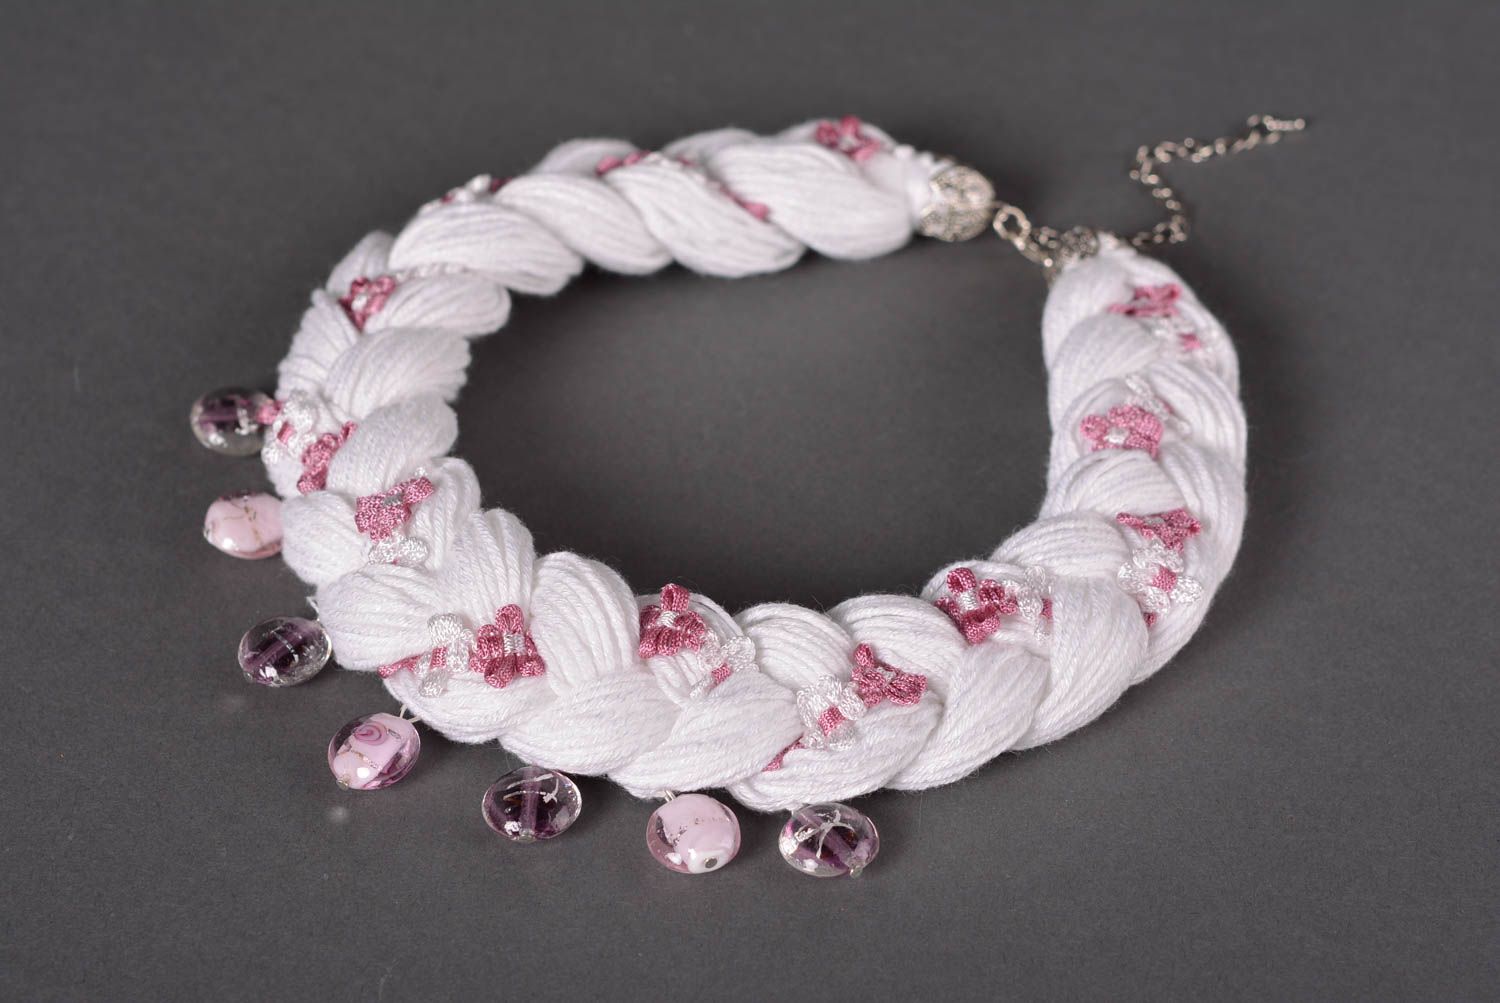 Handmade necklace braided necklace designer jewelry fashion accessories photo 1